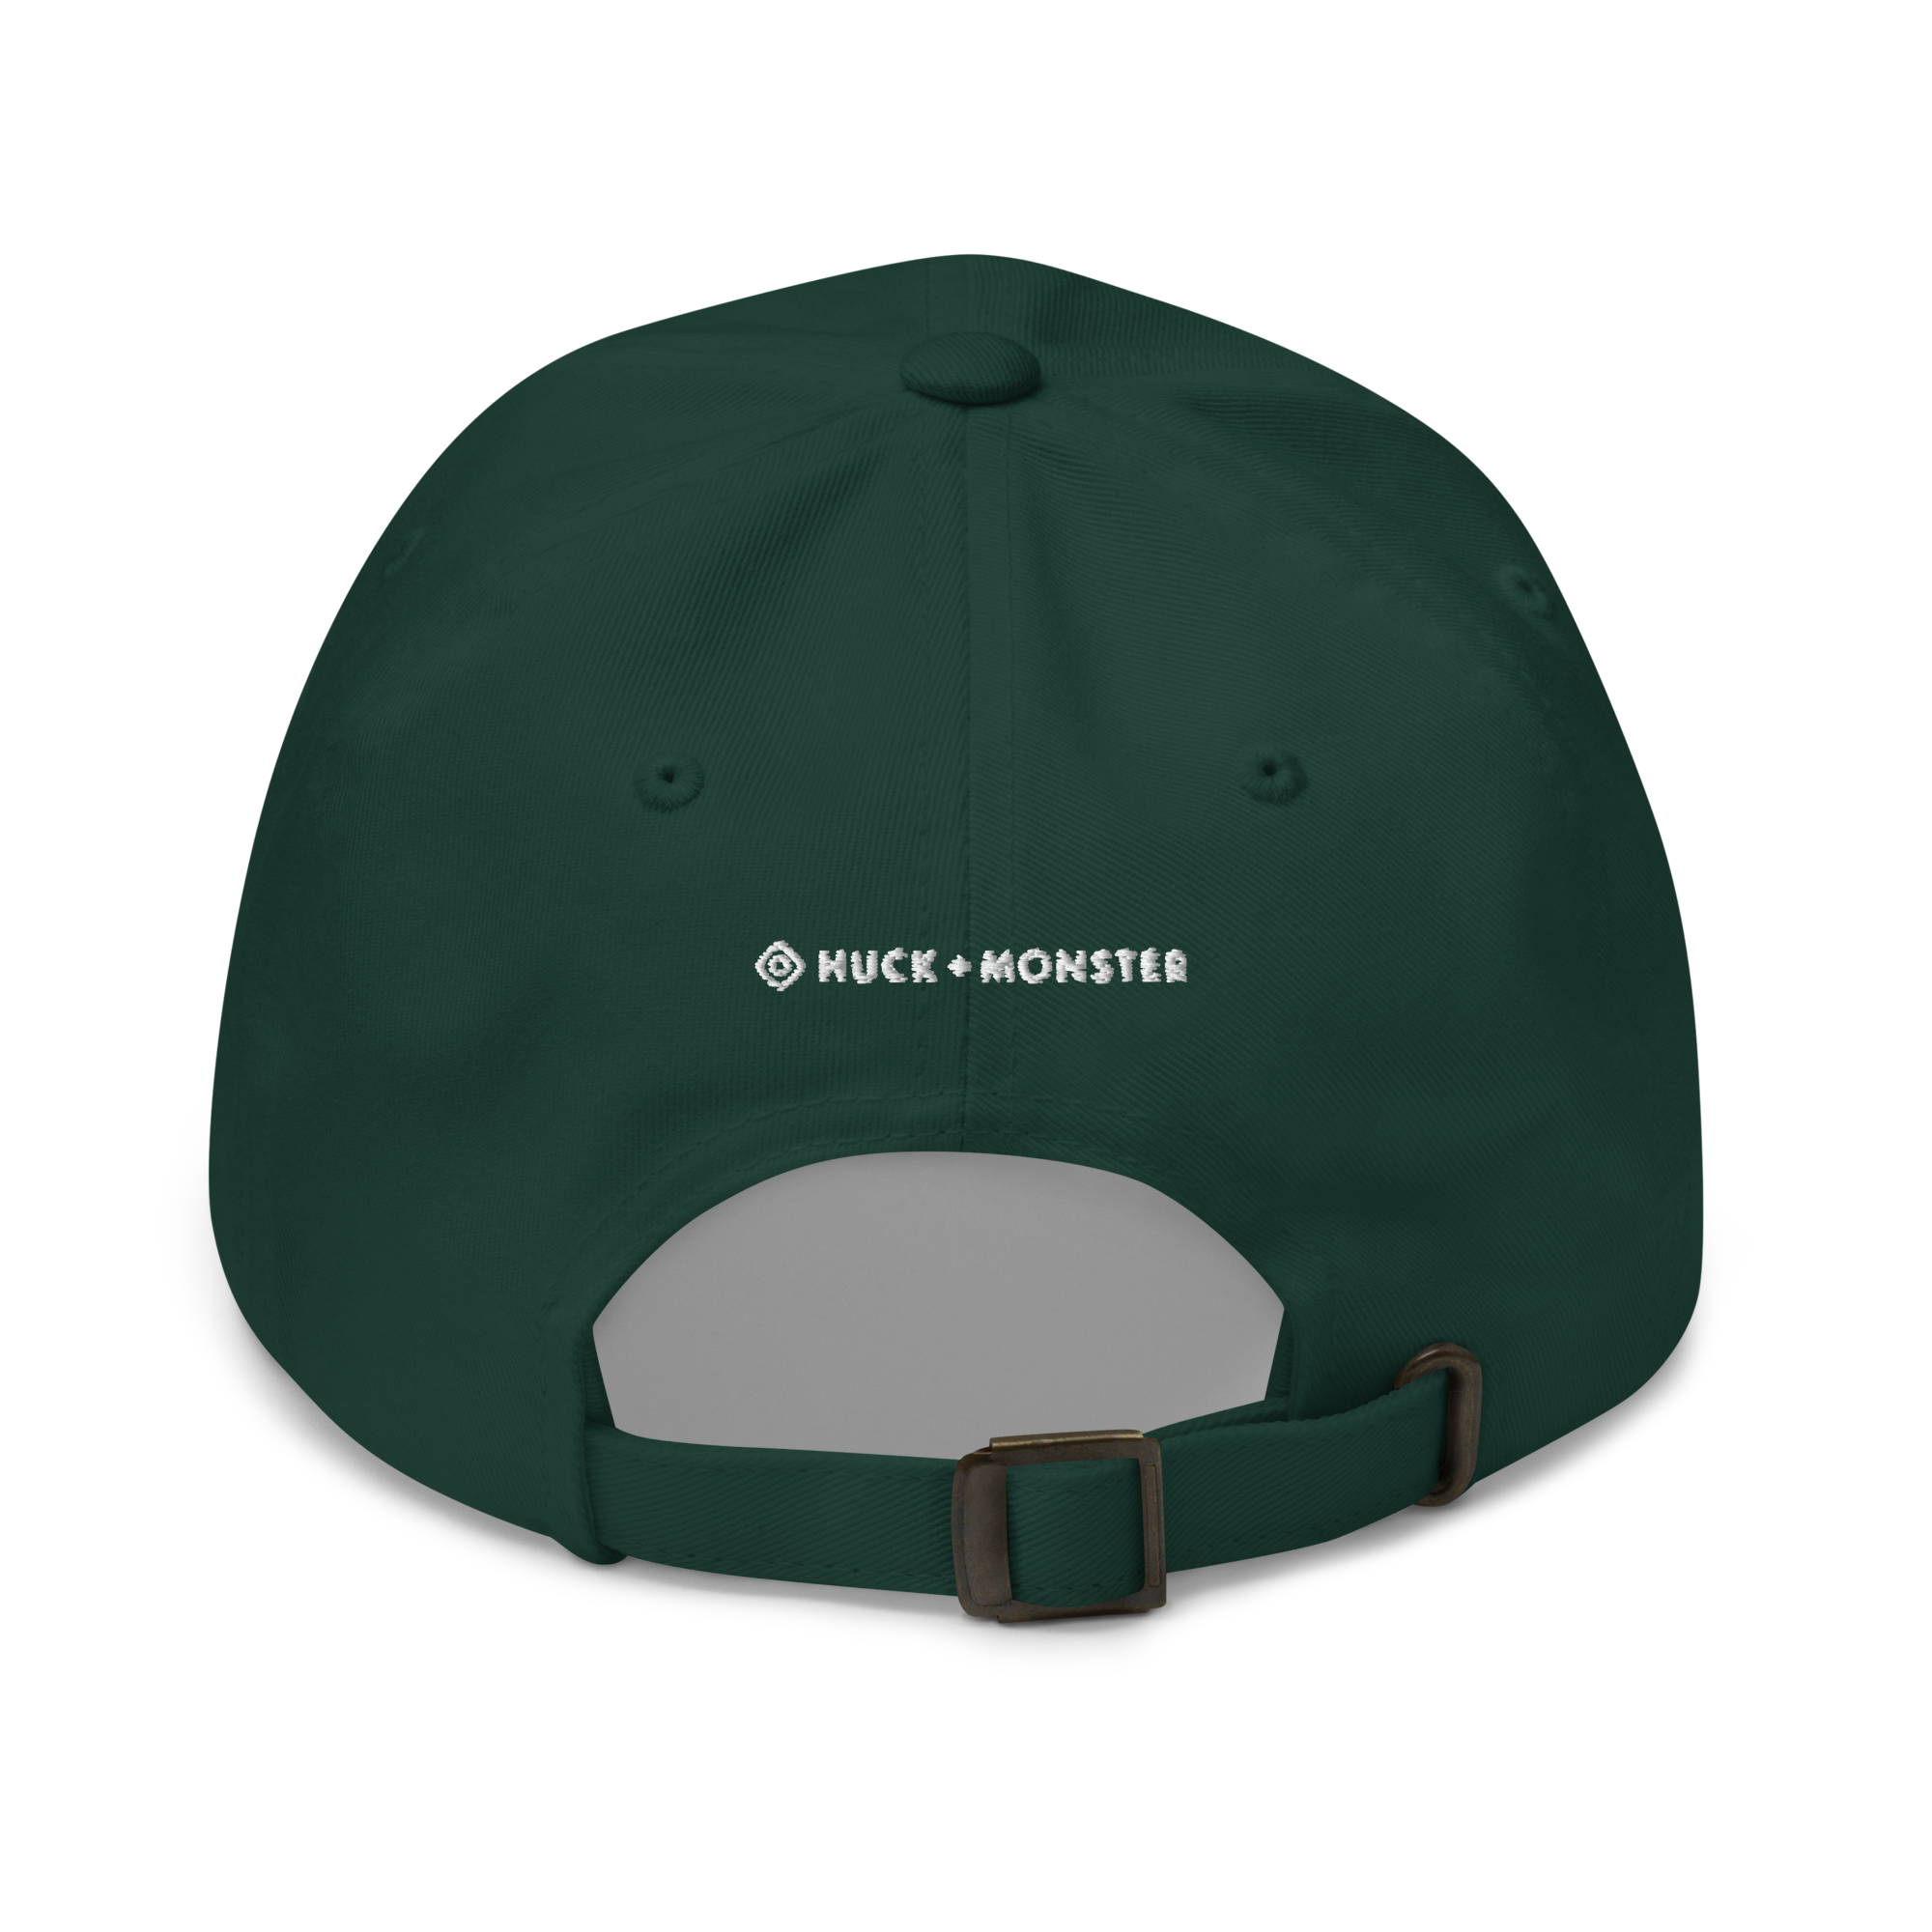 Coach's Sideline Cap (Dad Hat)